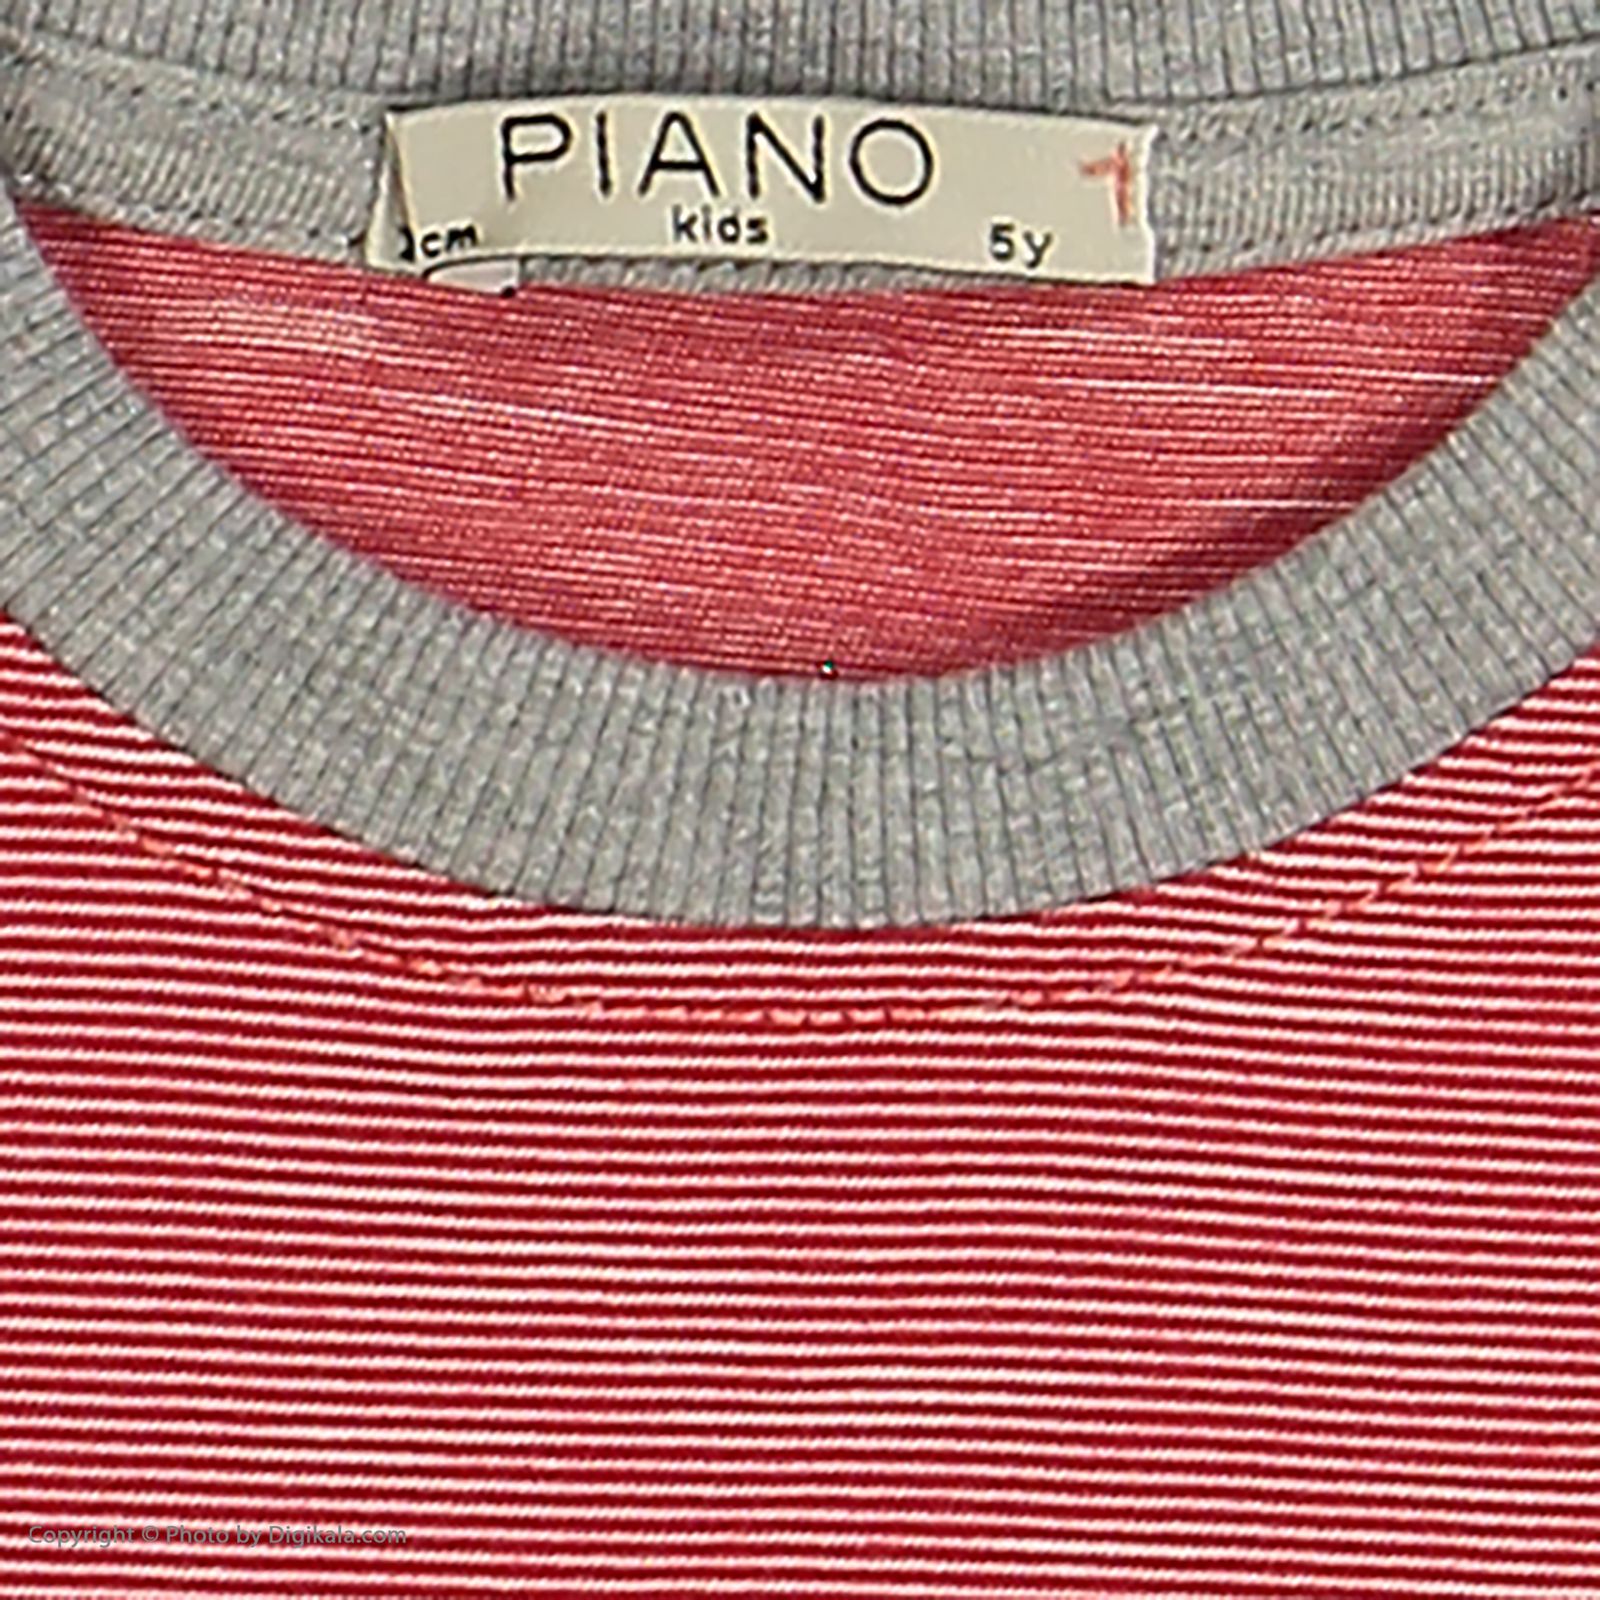 تی شرت پسرانه پیانو مدل 1559-72 -  - 5